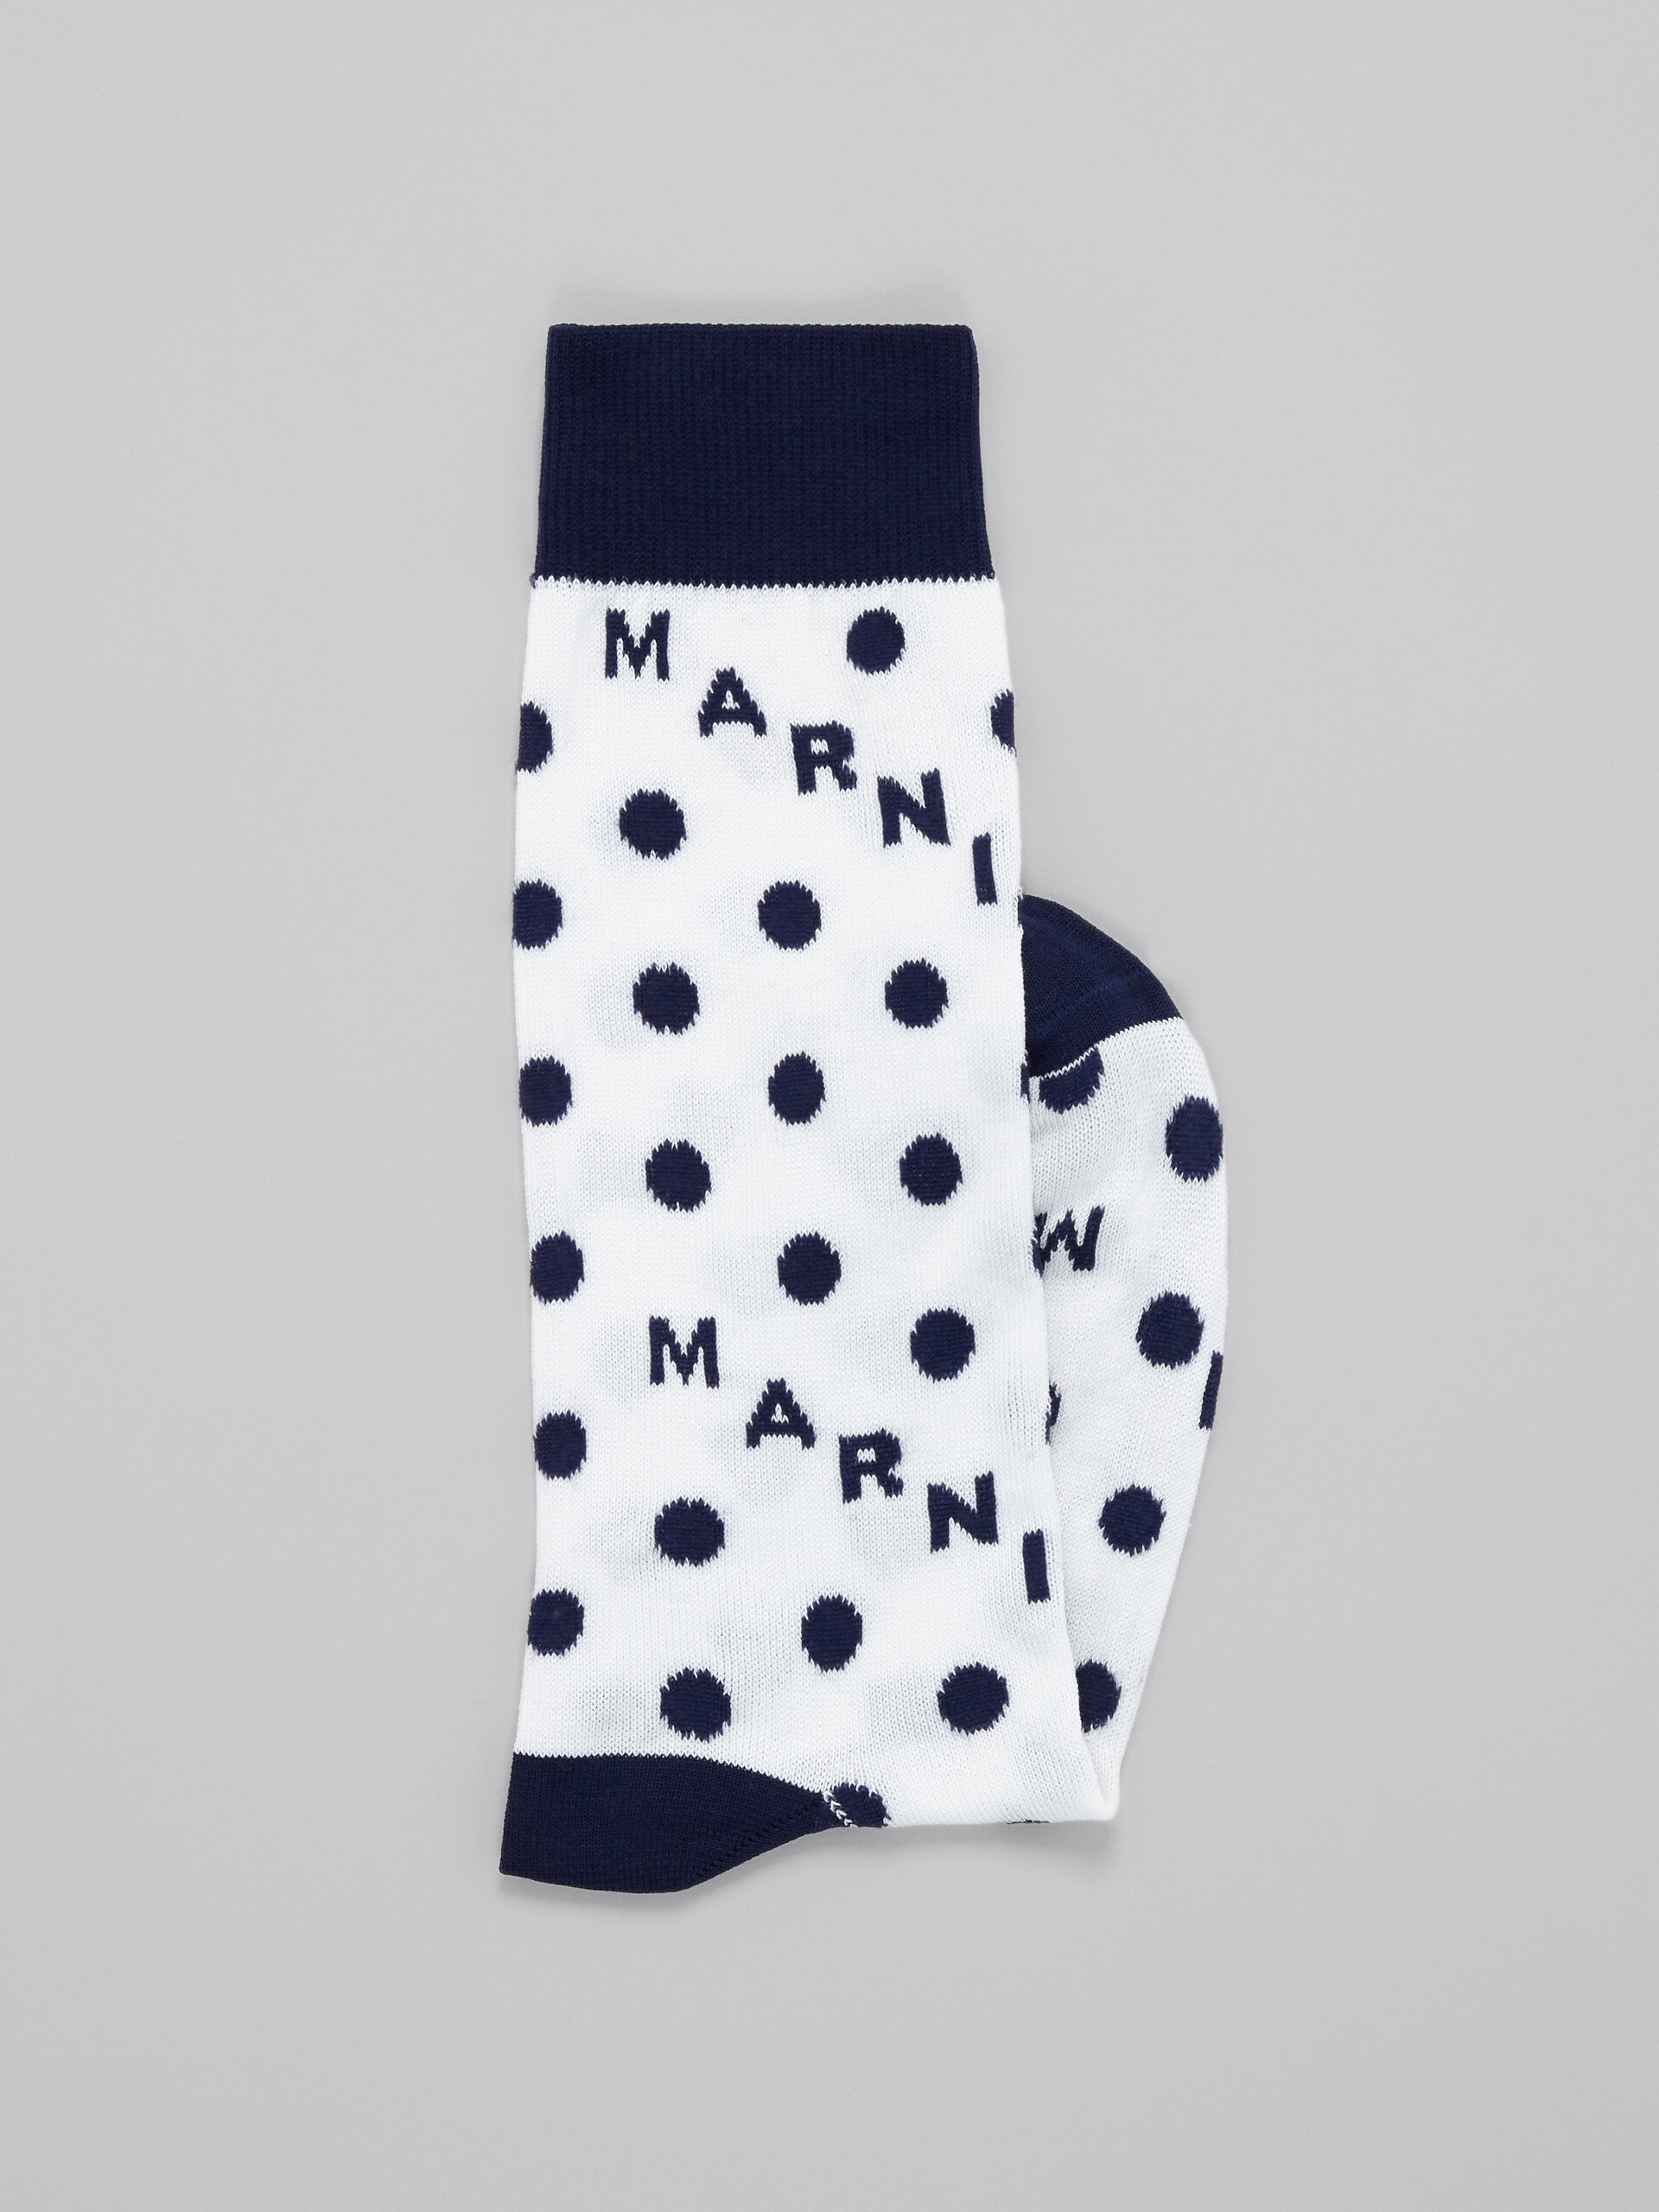 White cotton and nylon socks with polka dots - Socks - Image 2